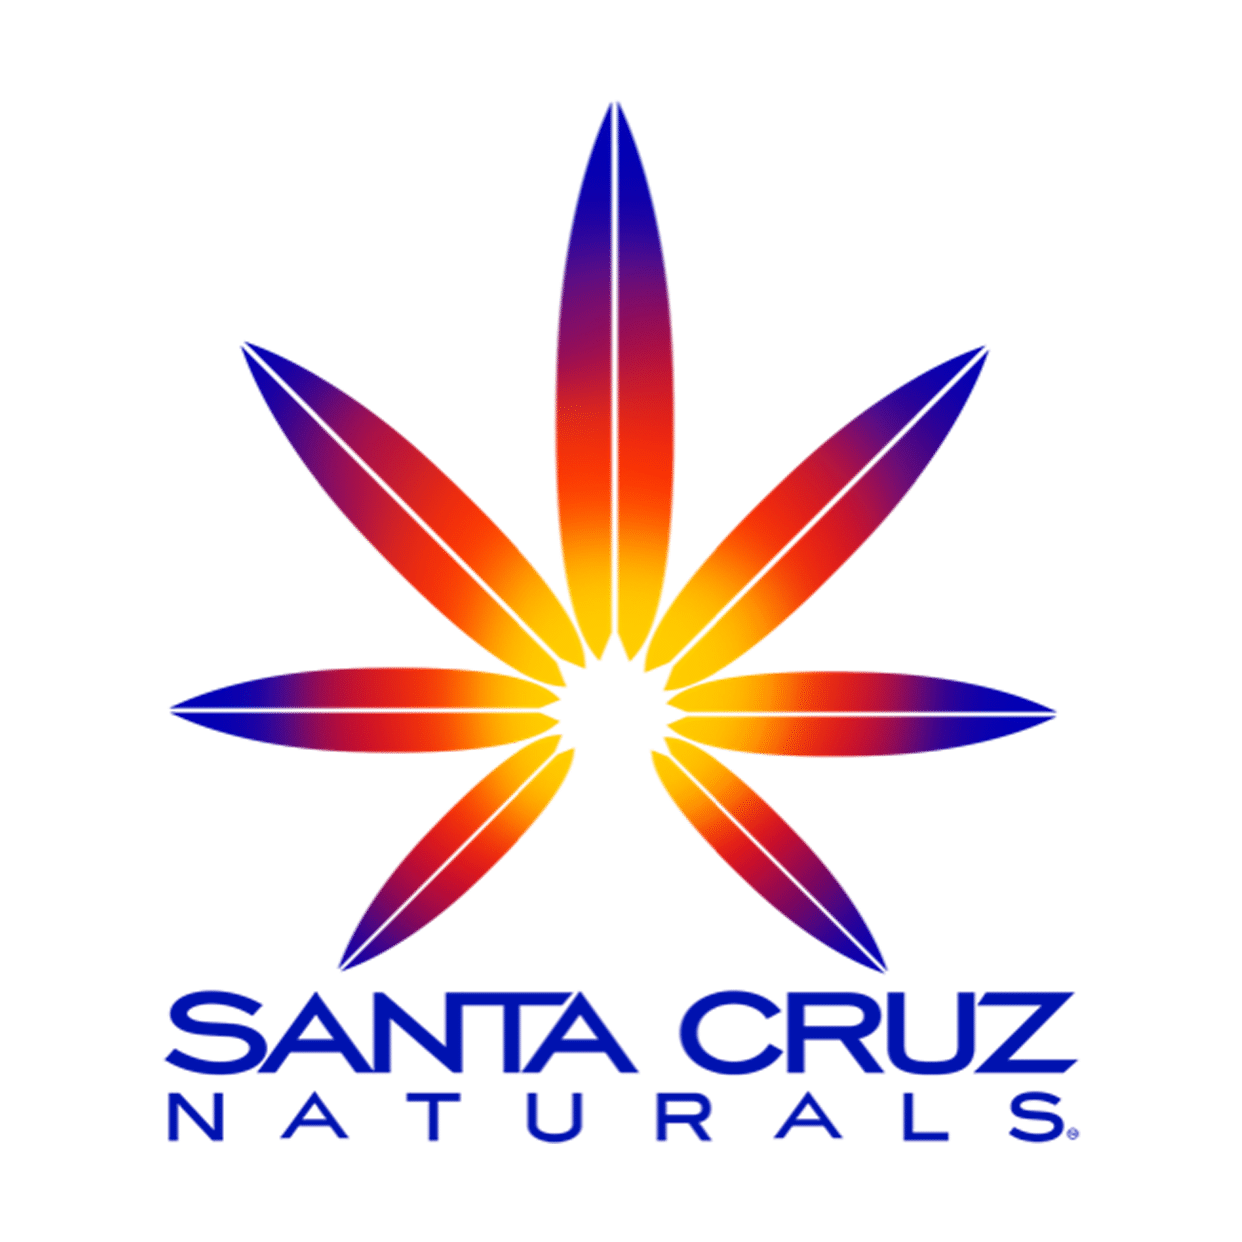 SANTA CRUZ NATURALS logo bright colorful